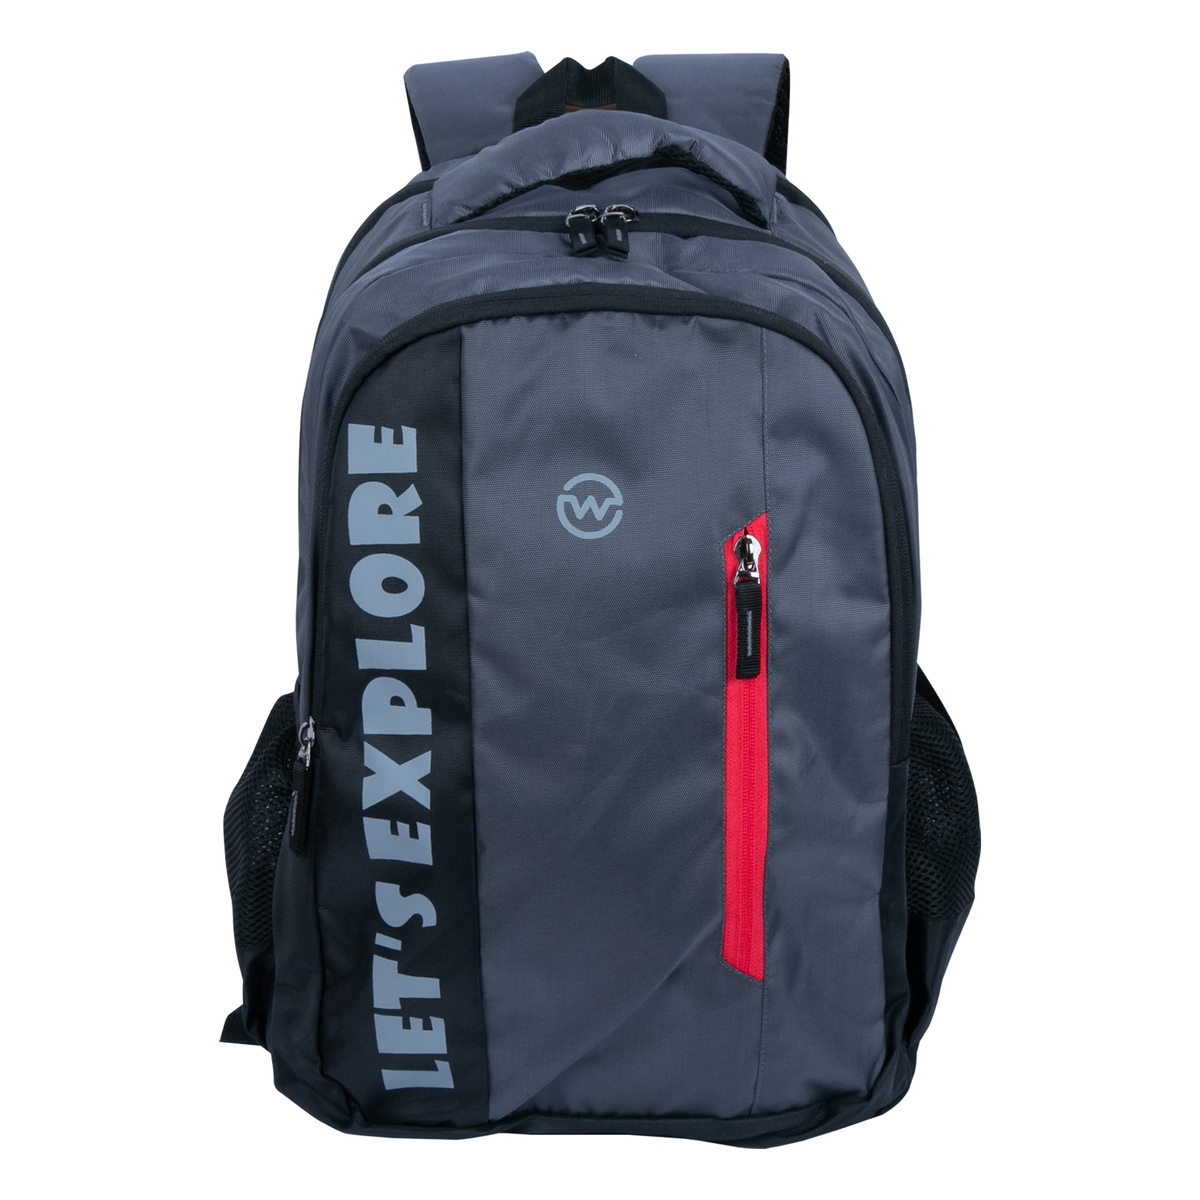 Wagon R TeenX Backpack EUME-03 19 inch